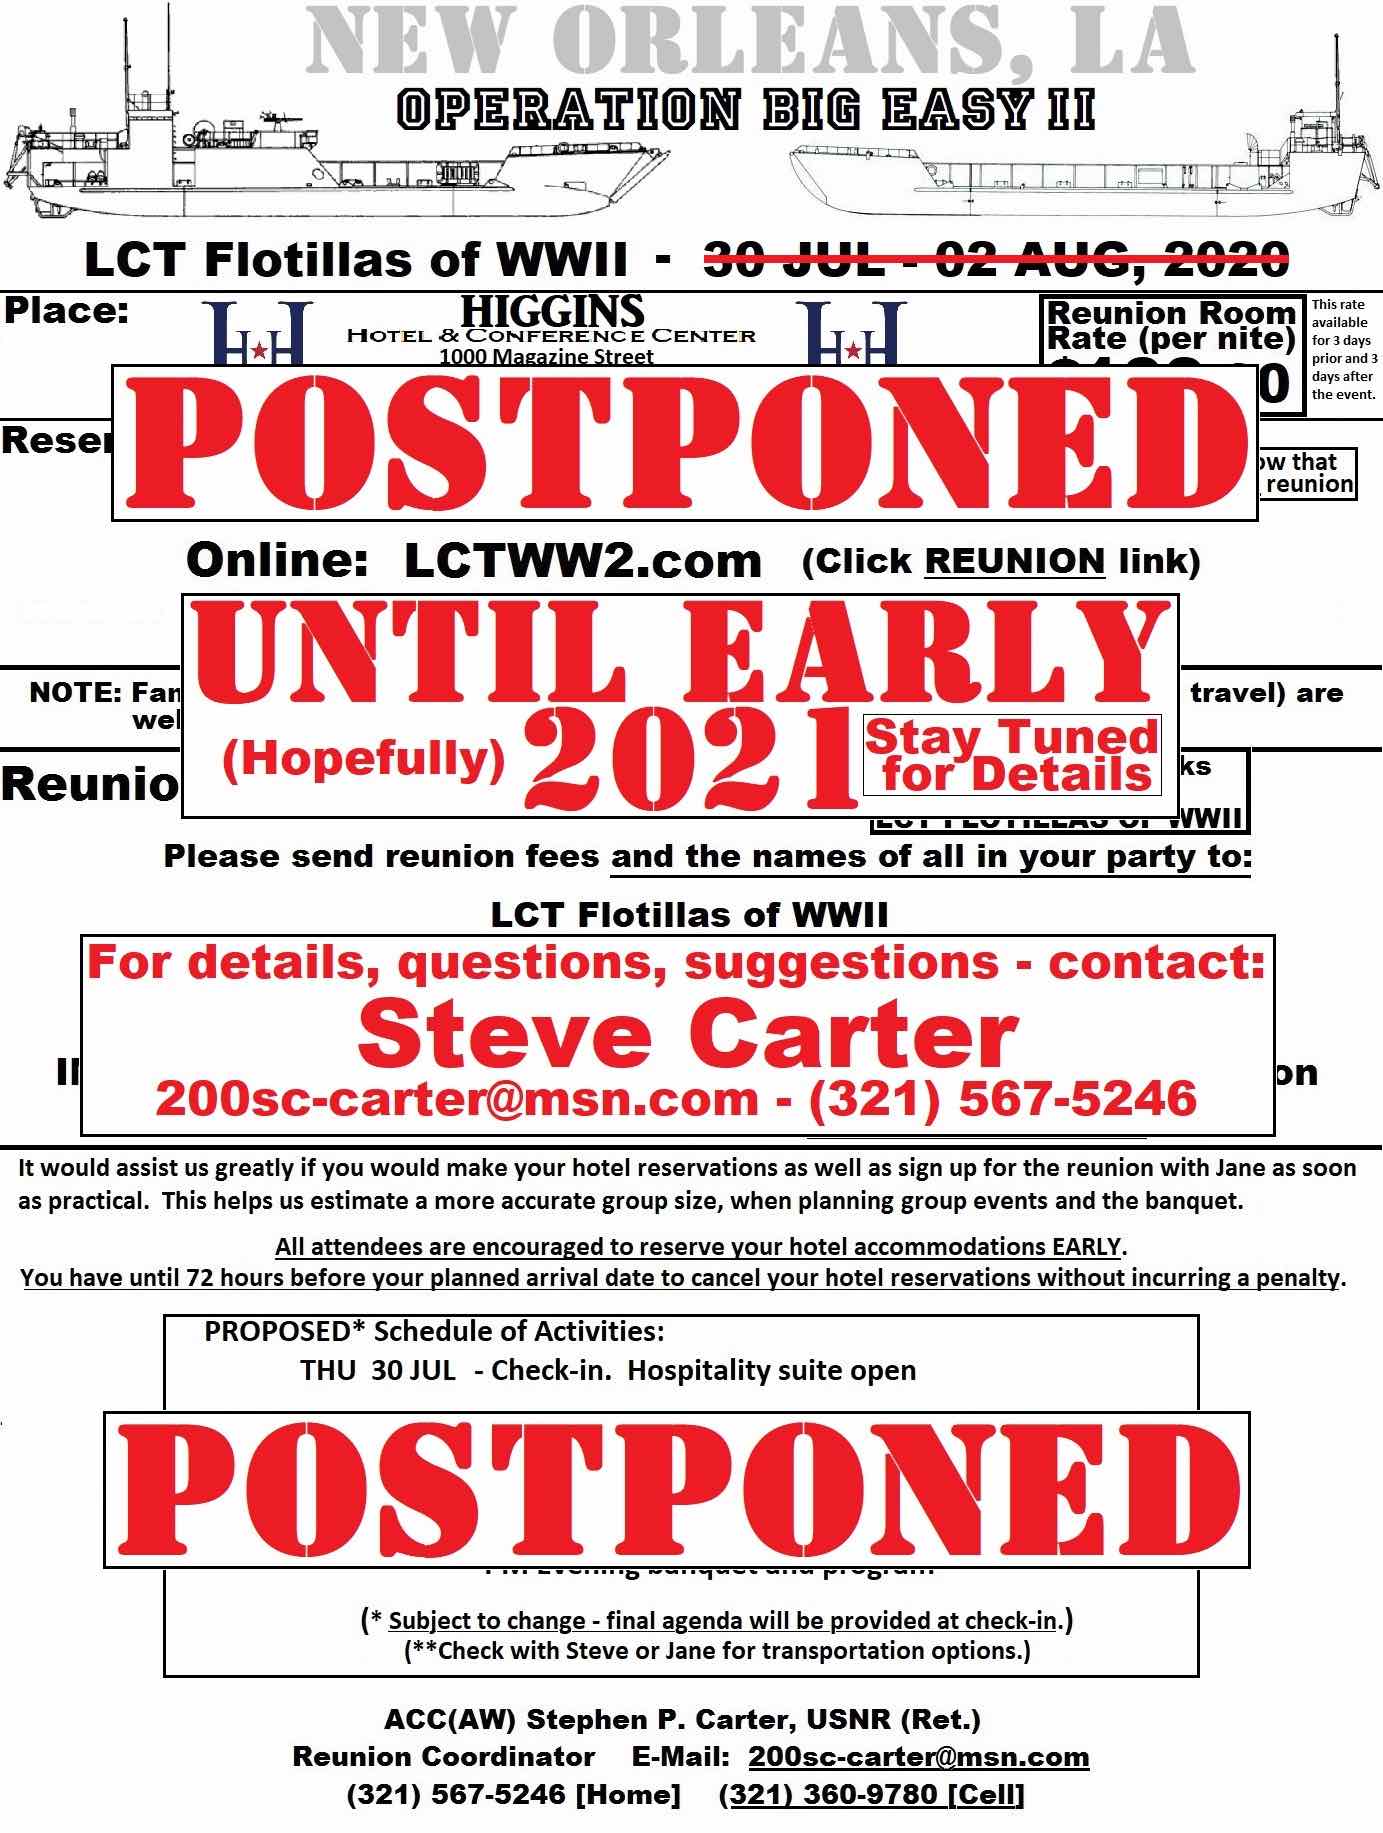 LCT Flotillas Of WWII Reunion - New Orleans LA, Jul 30 - Aug 02, 2020 Flyer Postponed